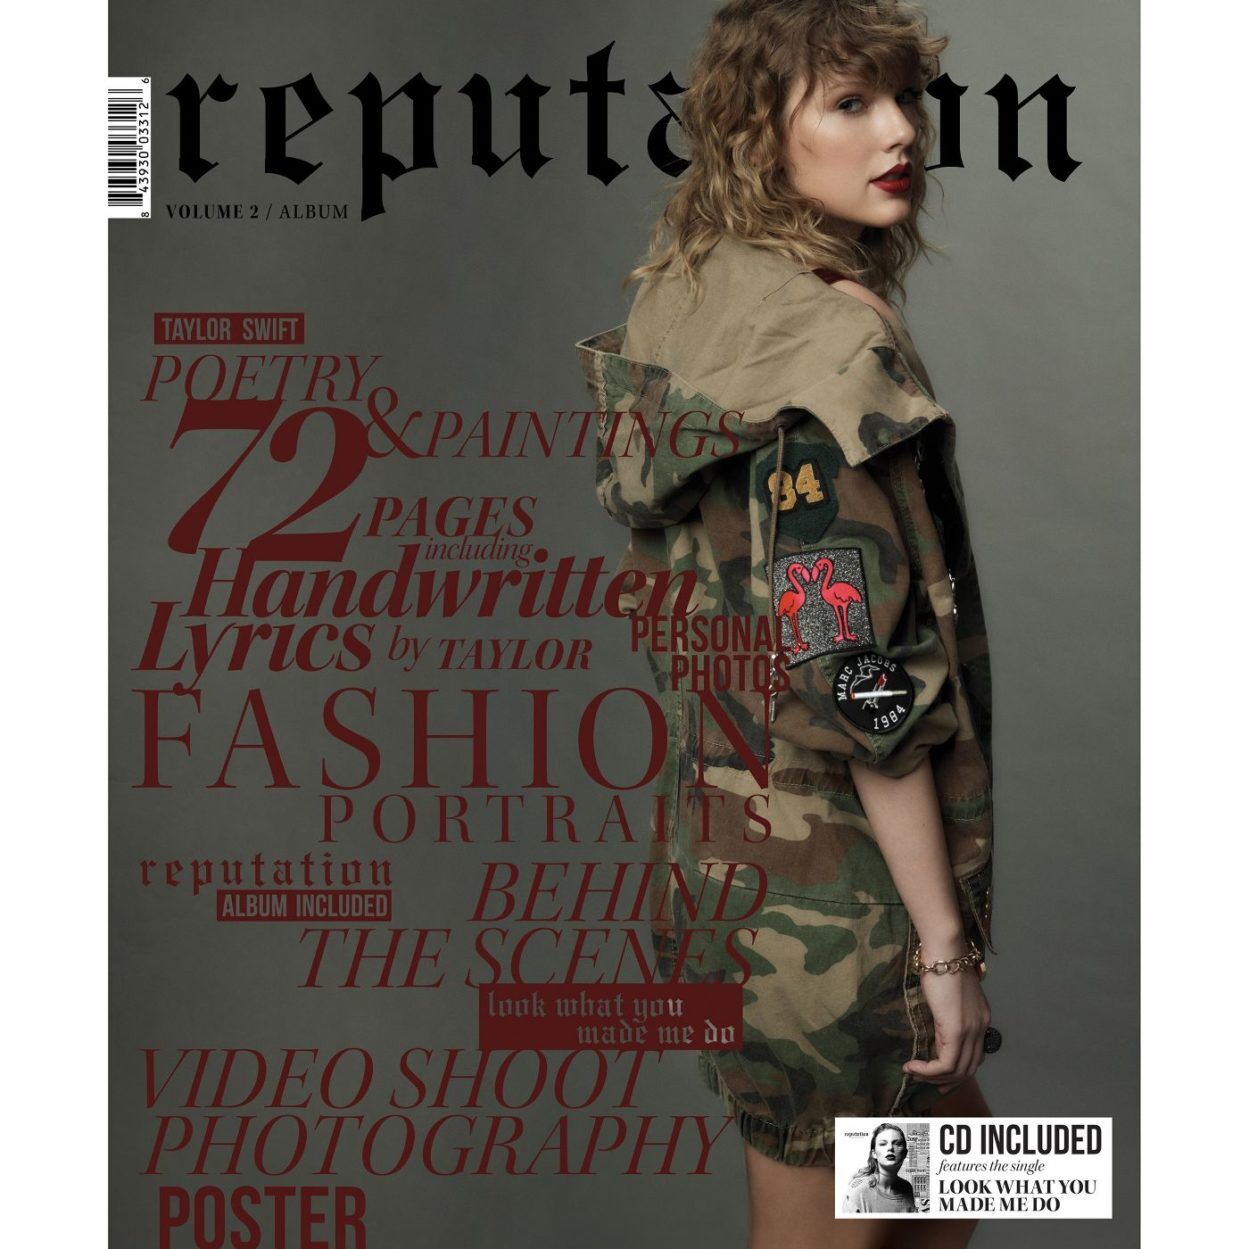 Taylor swift reputation magazine philippines